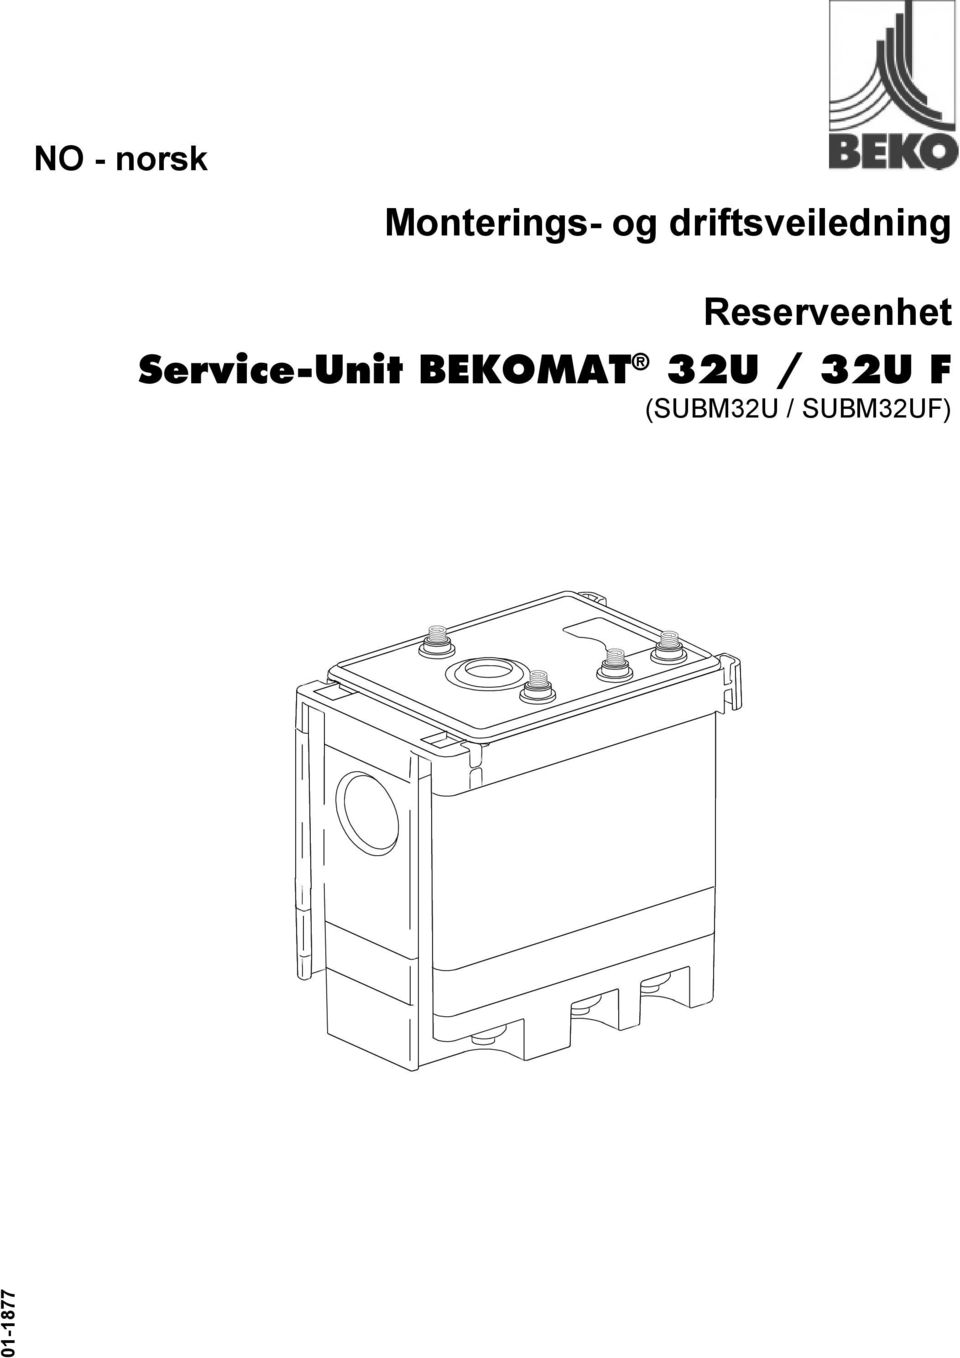 Service-Unit BEKOMAT 32U /